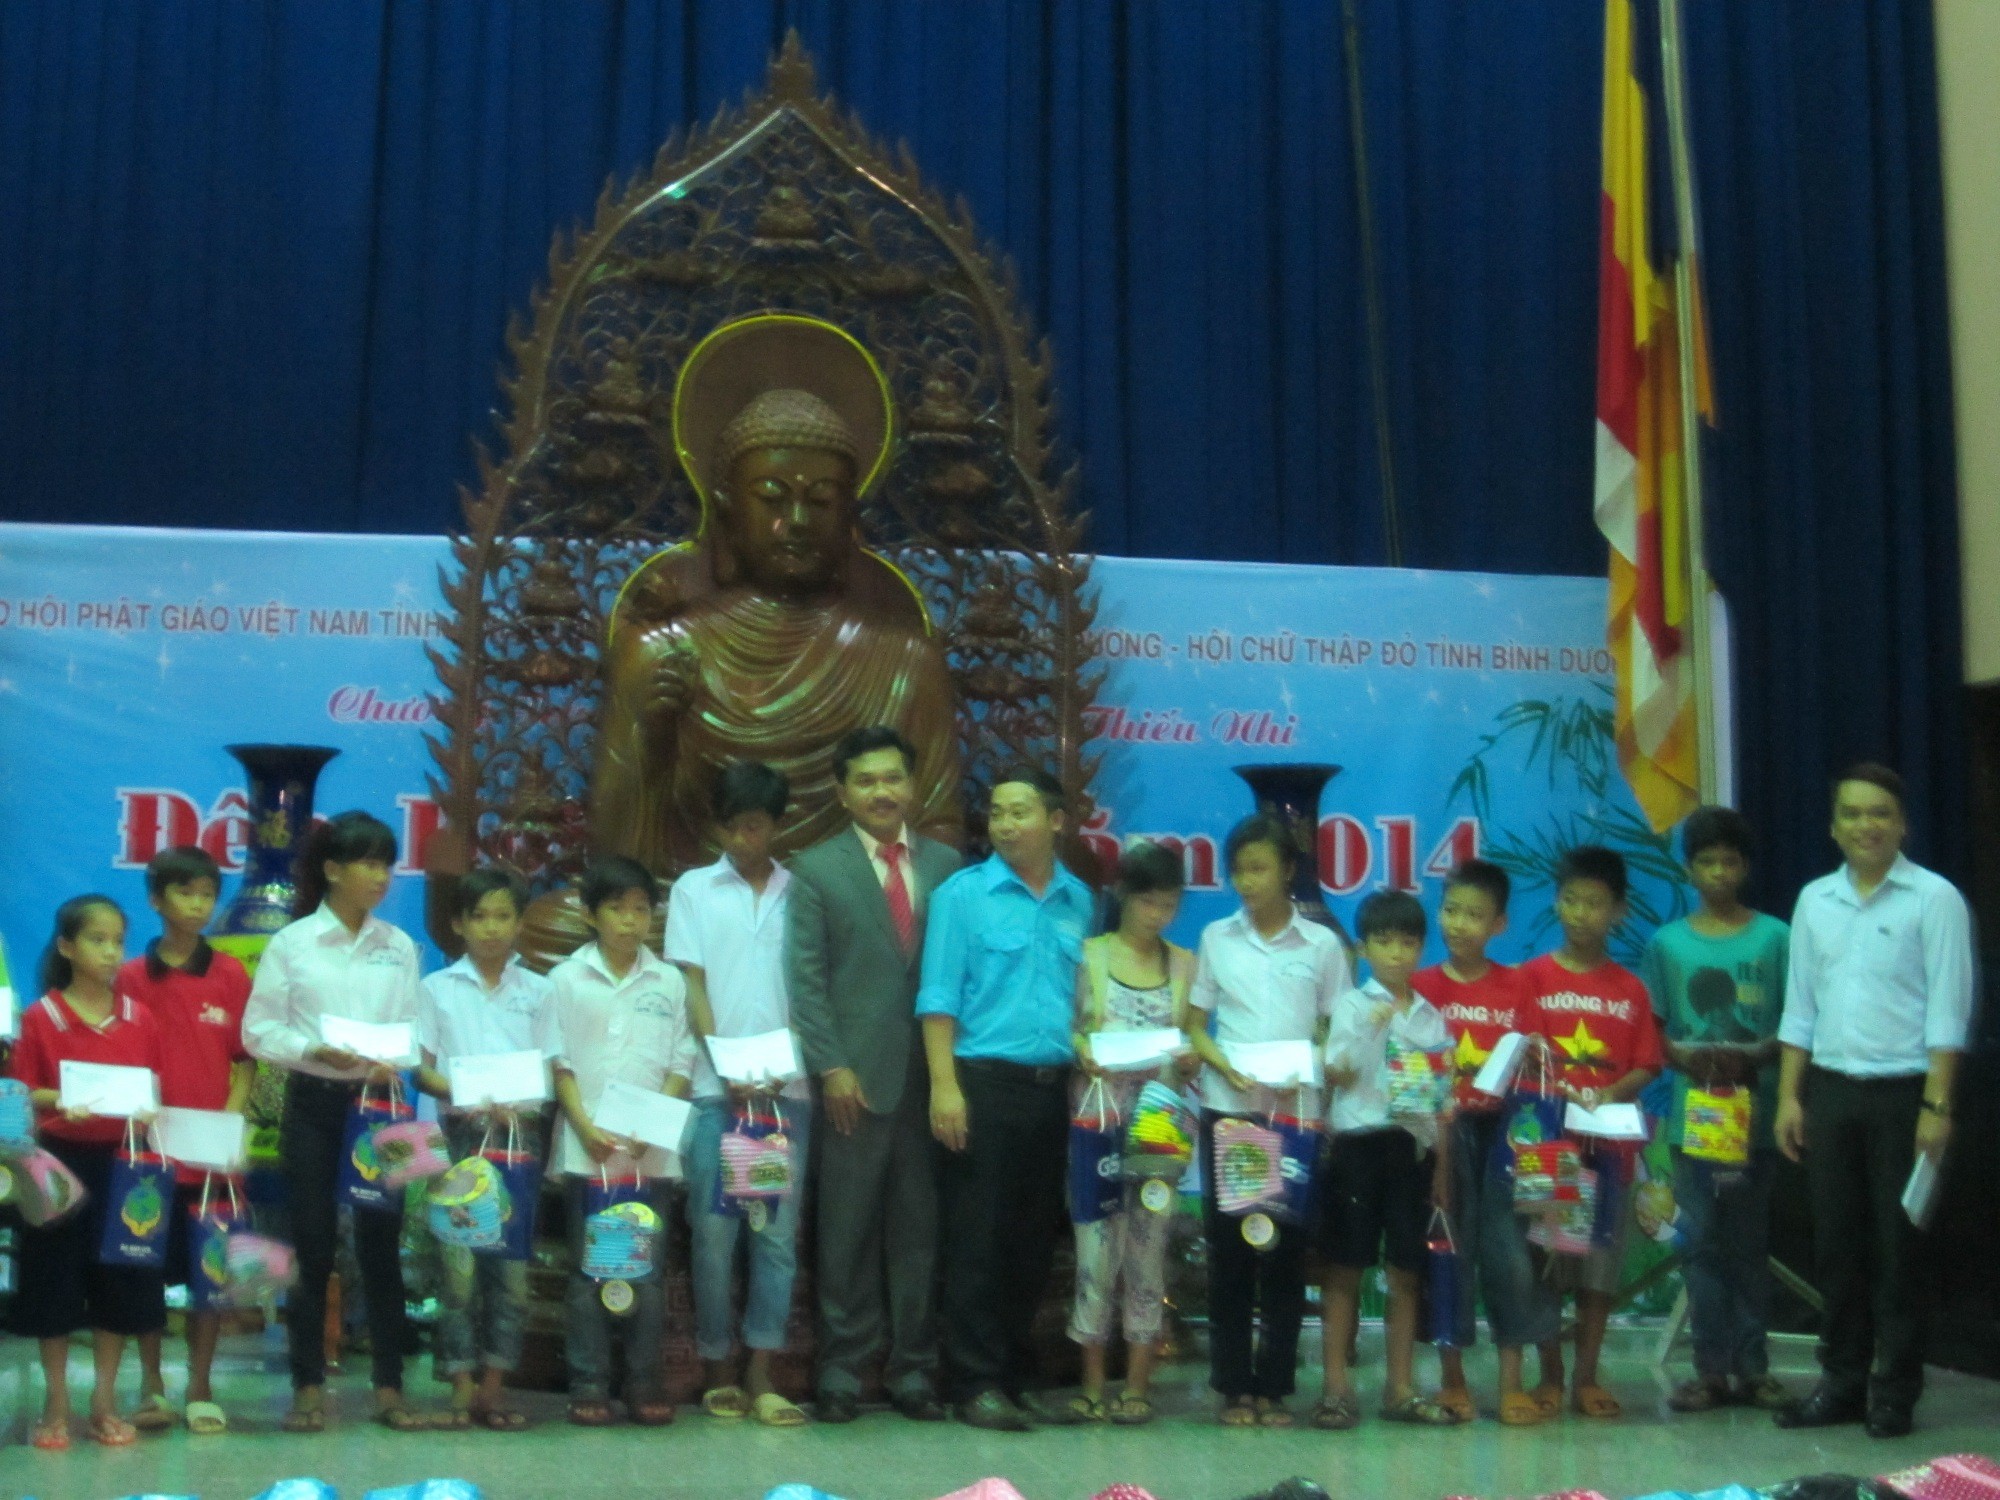 SPONSORED THE “FULL MOON PARTY” PROGRAM AT HOI KHANH PAGODA IN BINH DUONG